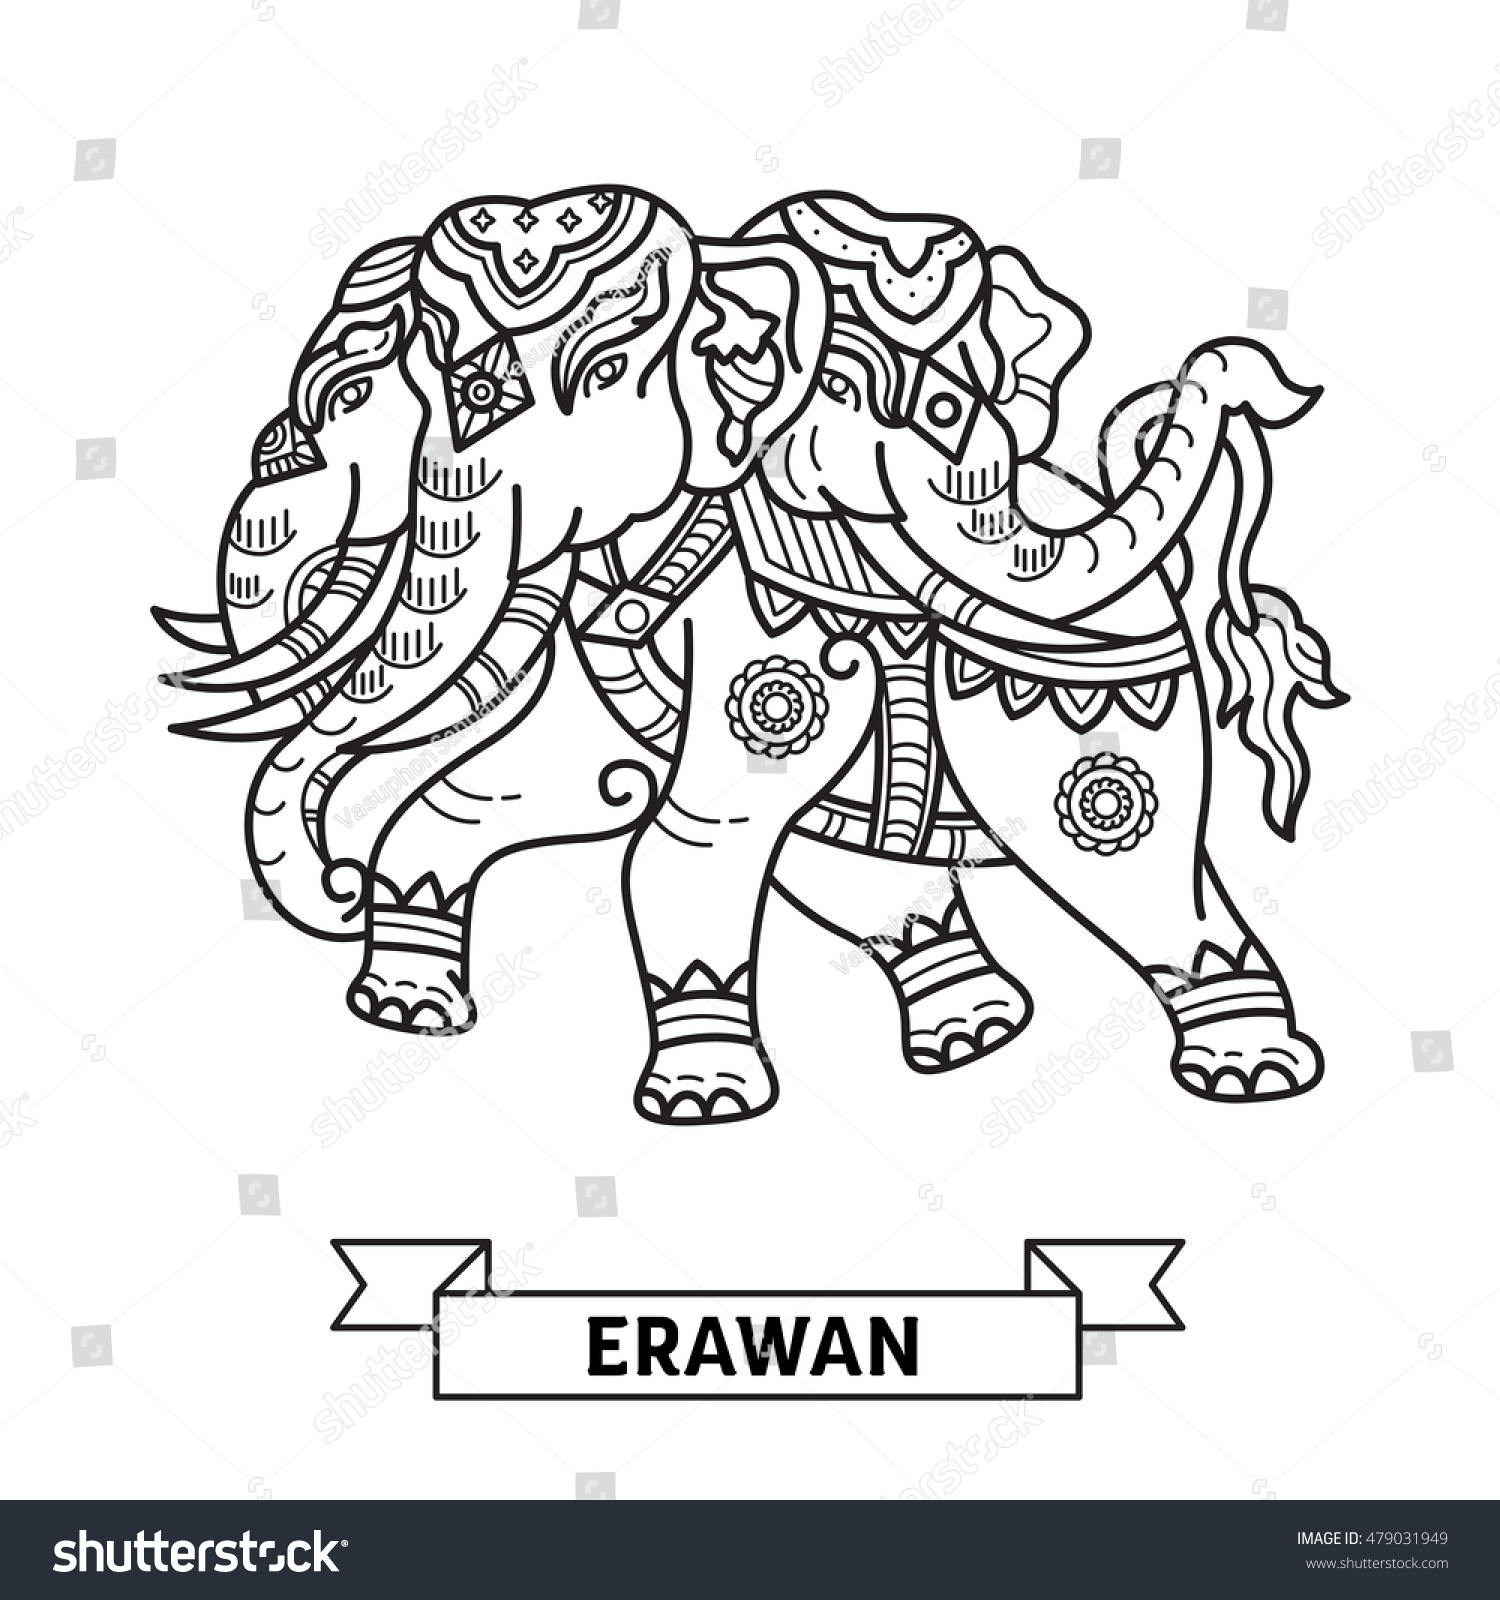 SVG of Erawan elephant svg